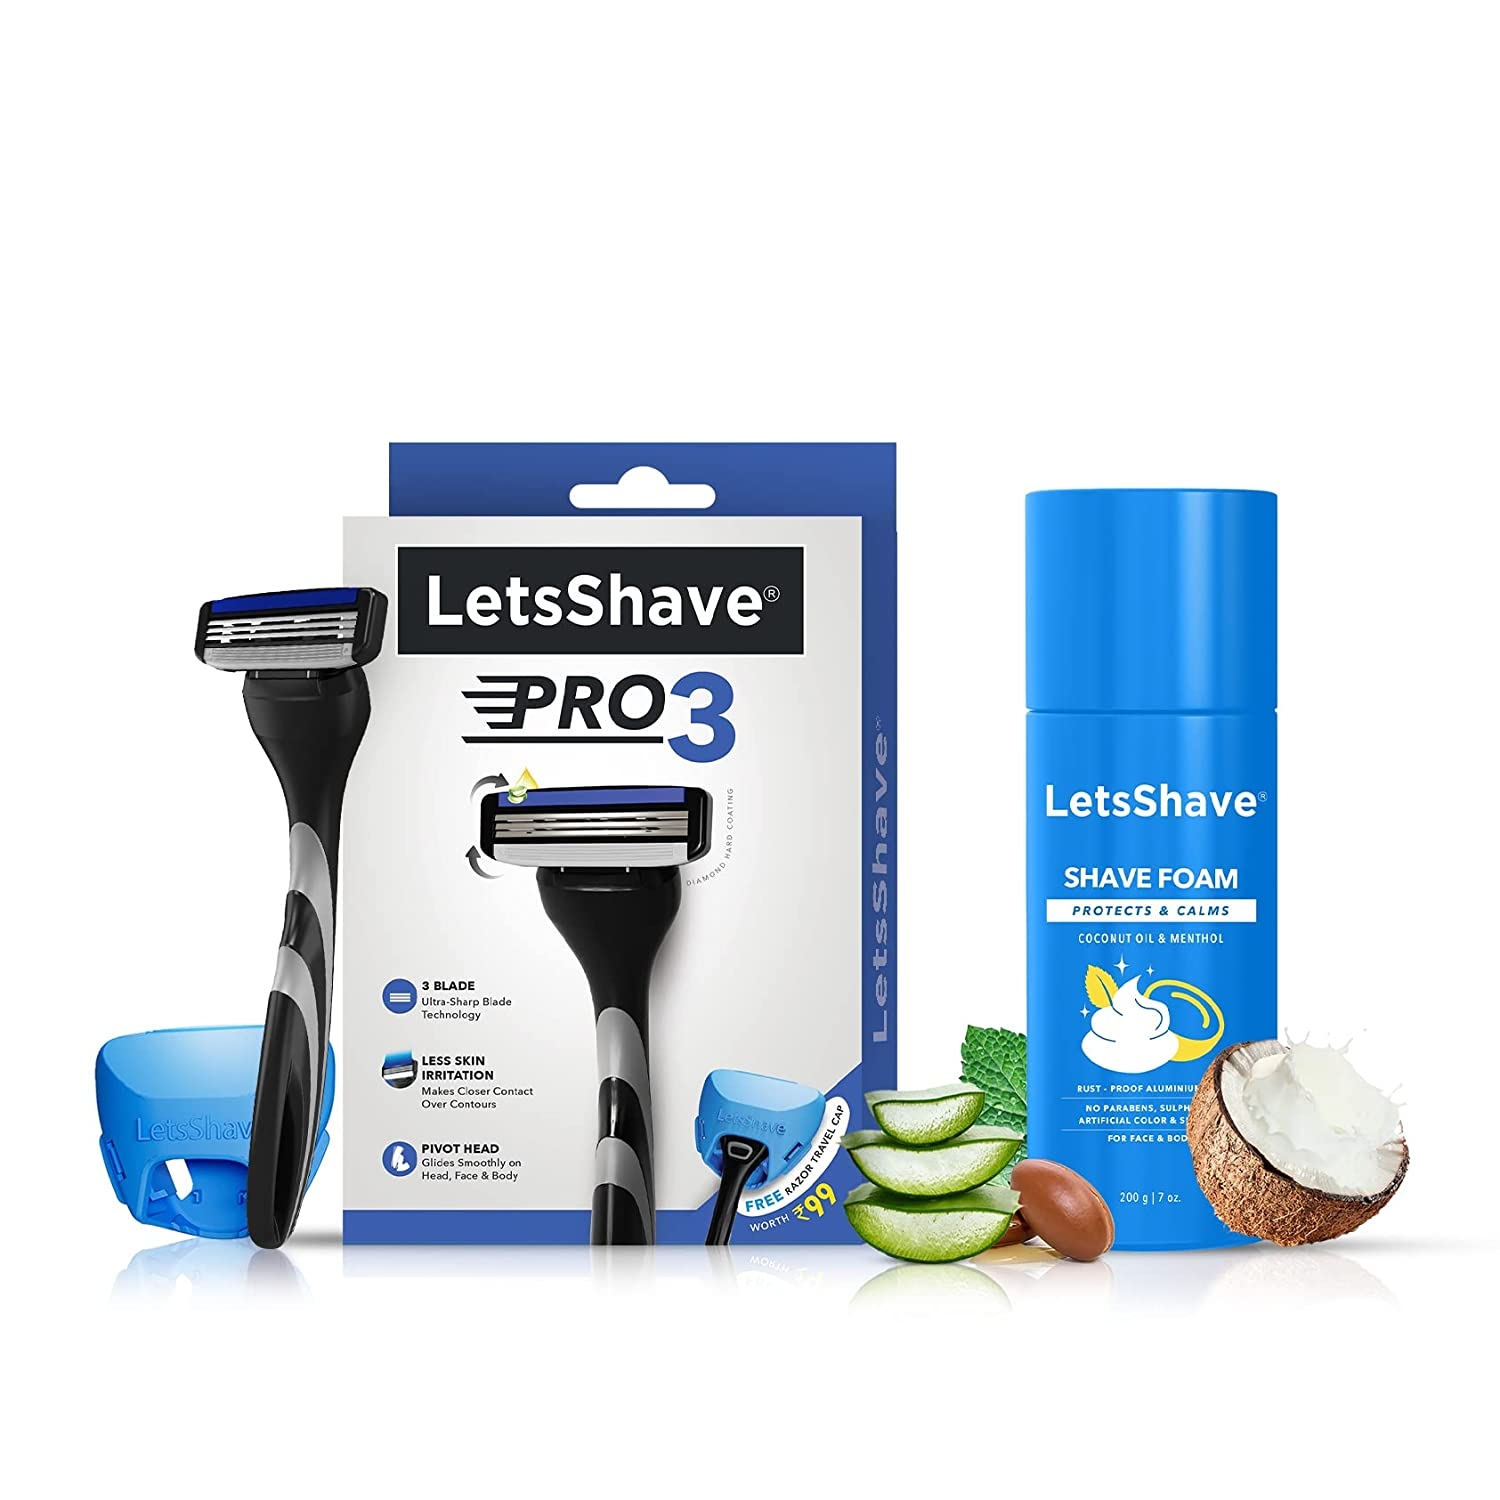 LetsShave | LetsShave Pro 3 Razor Trial Kit for Men - Pro 3 Blade + Razor Handle + Shave Foam - 200 gm 0